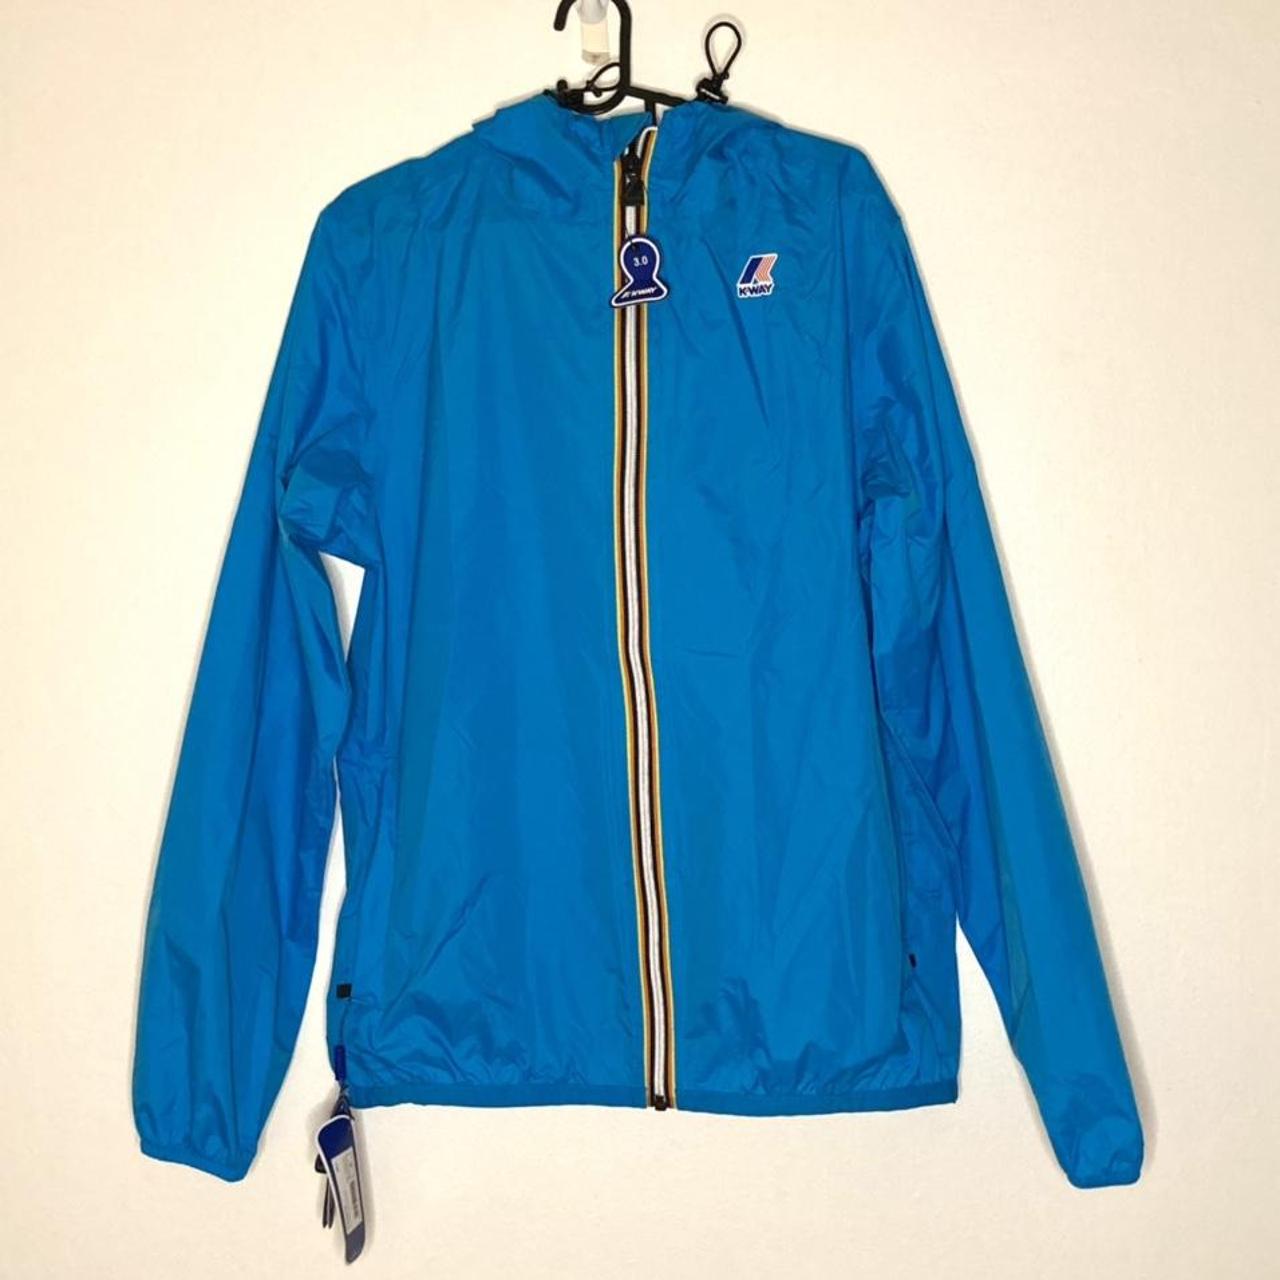 Product Image 3 - PRODUCT: Rain jacket 
BRAND: K-way
COLOR: